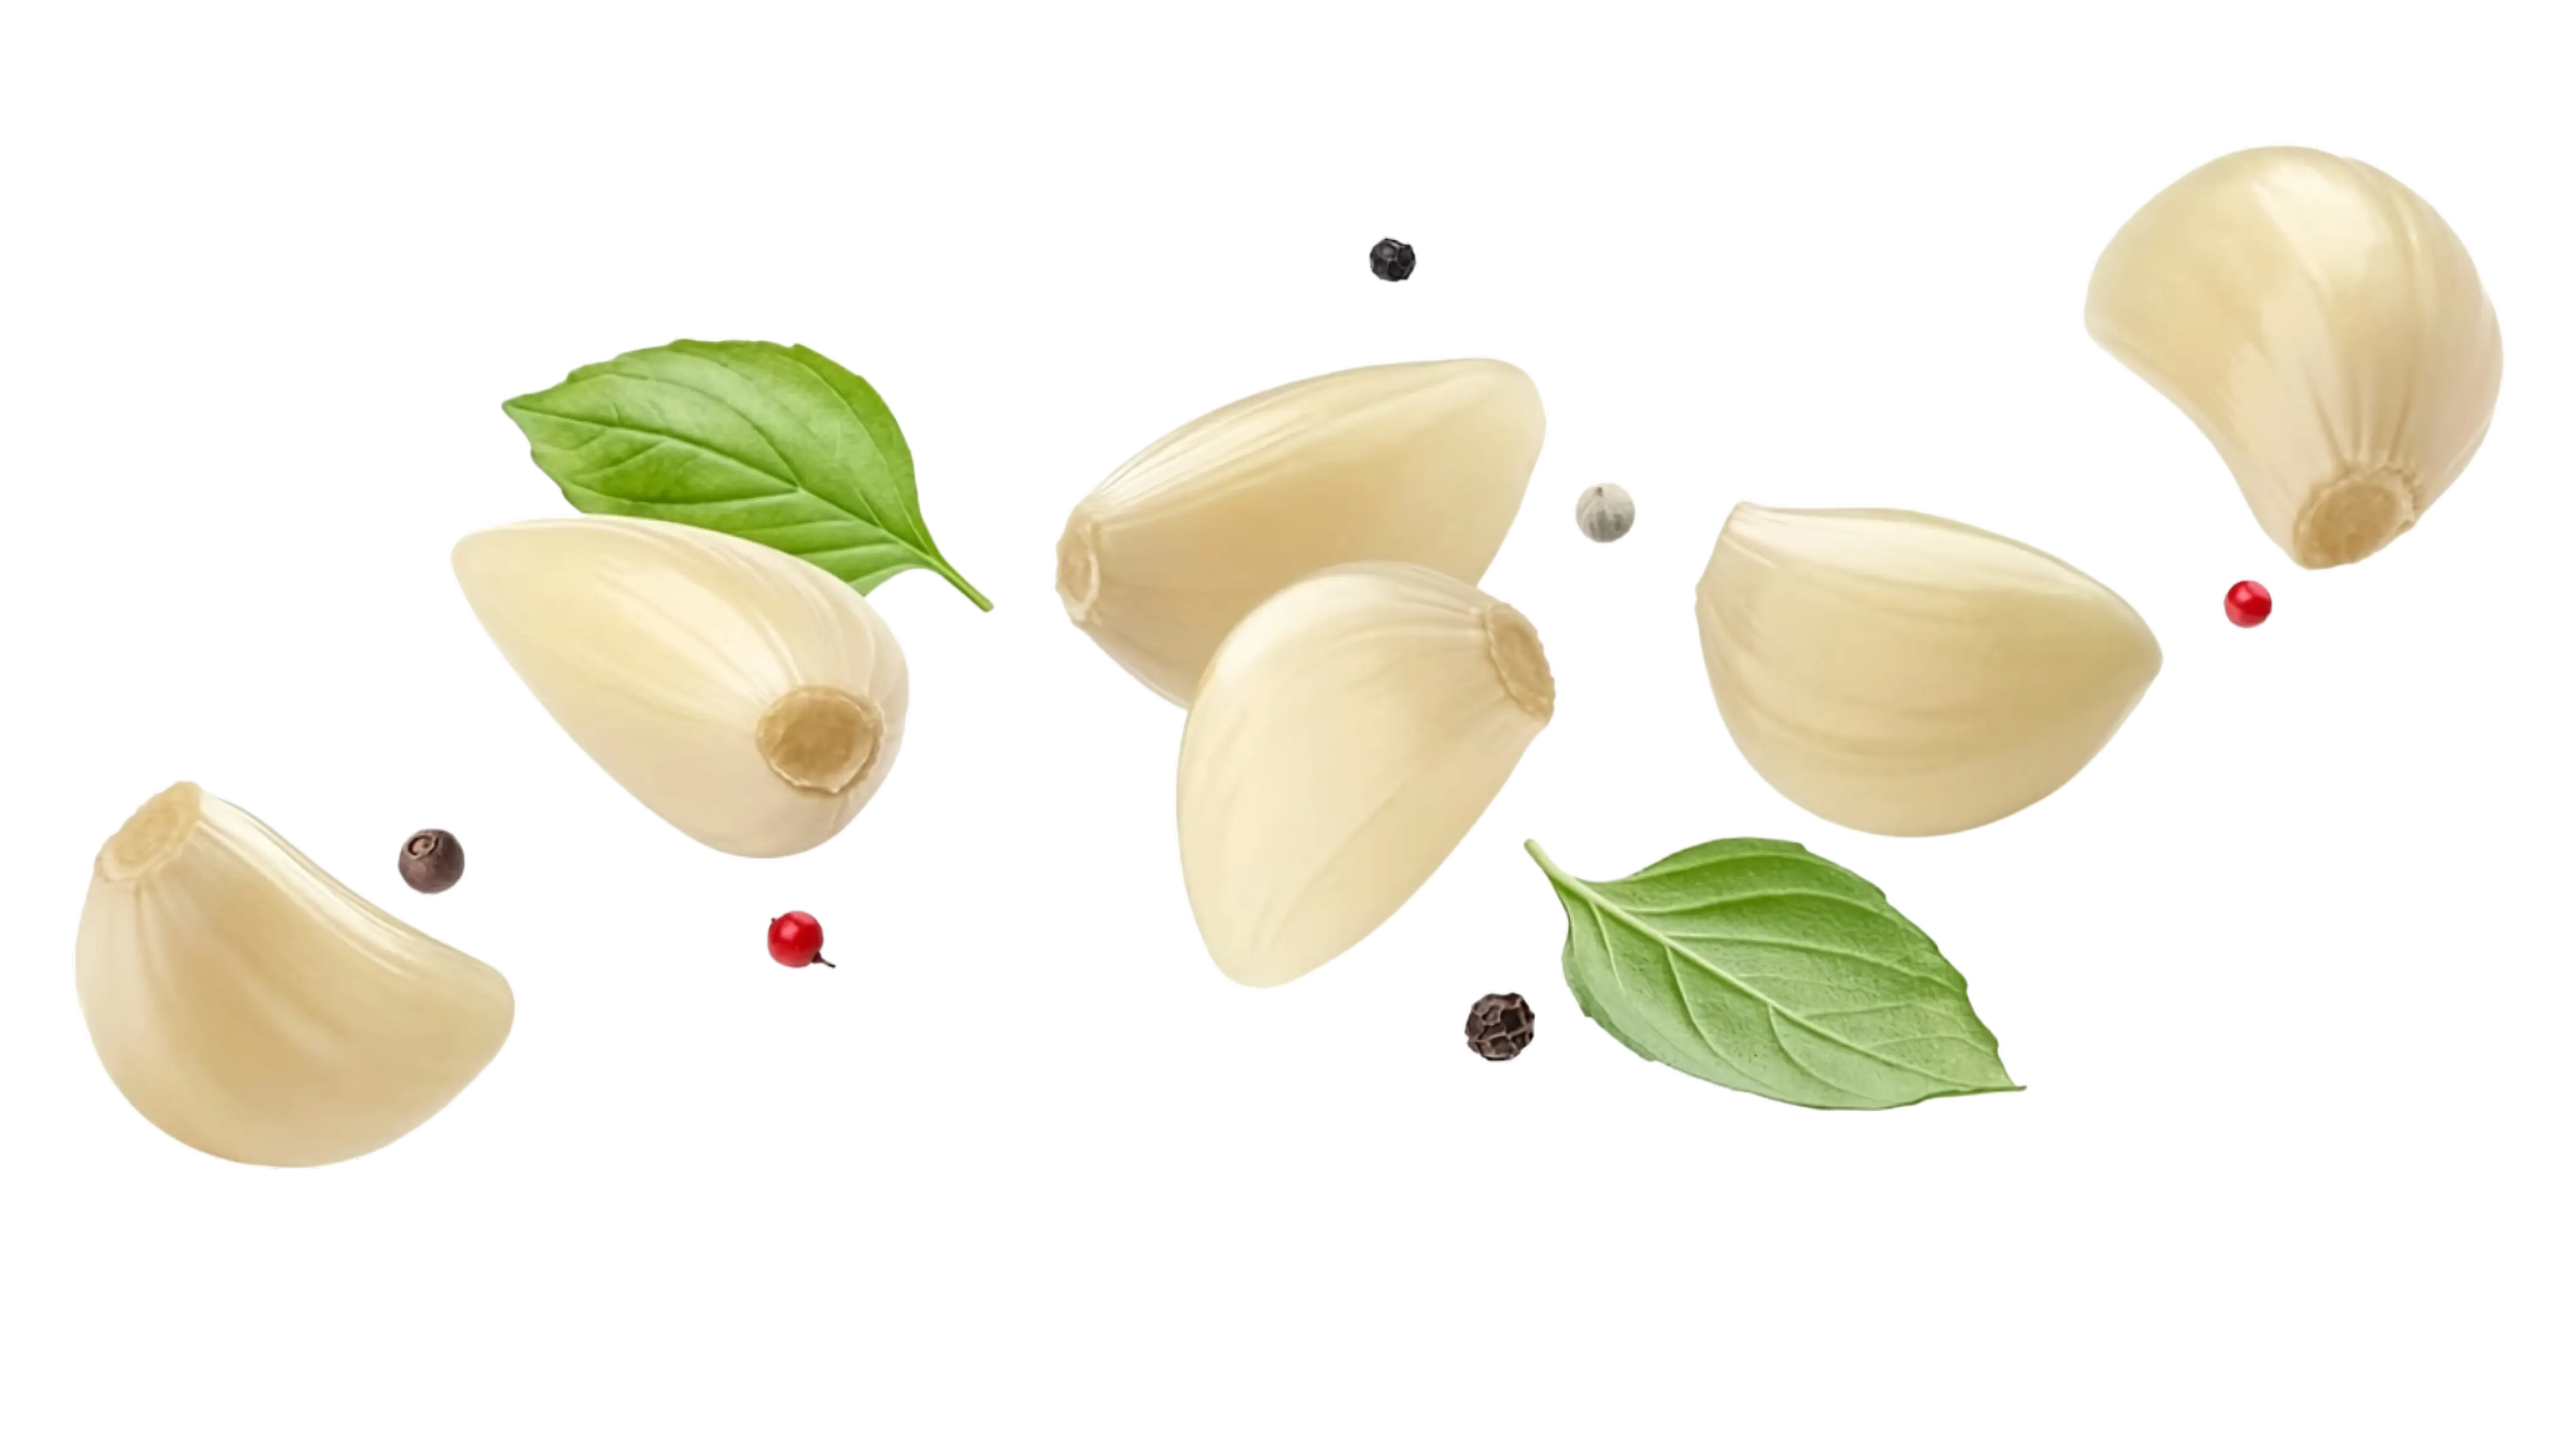 Garlic adornment